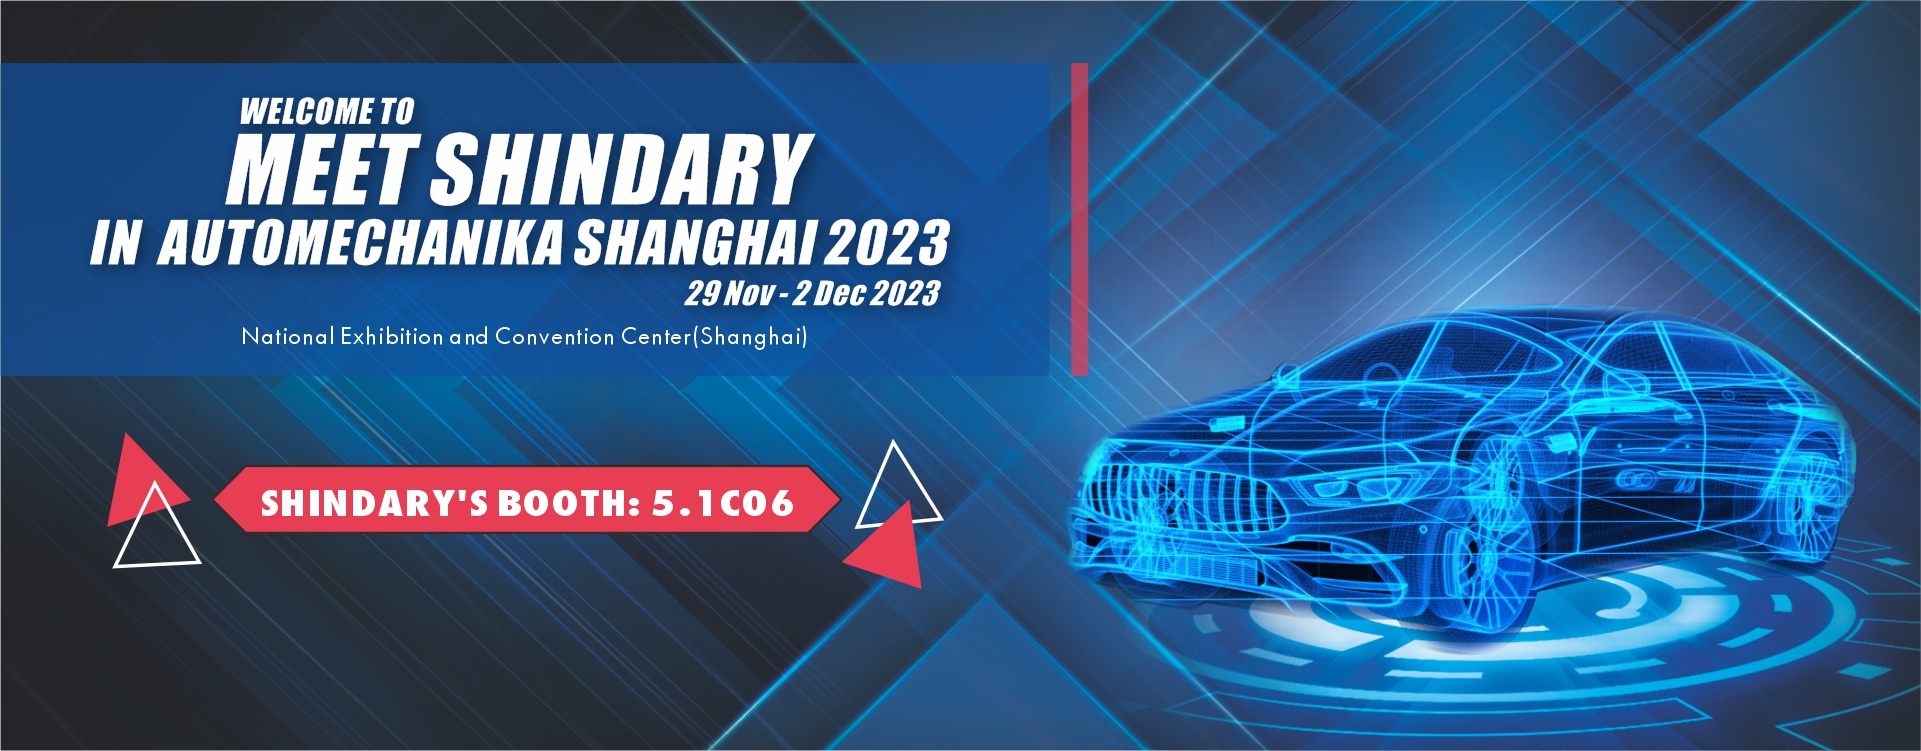 The Invitation of Automechanika Shanghai 2023 from Shindary